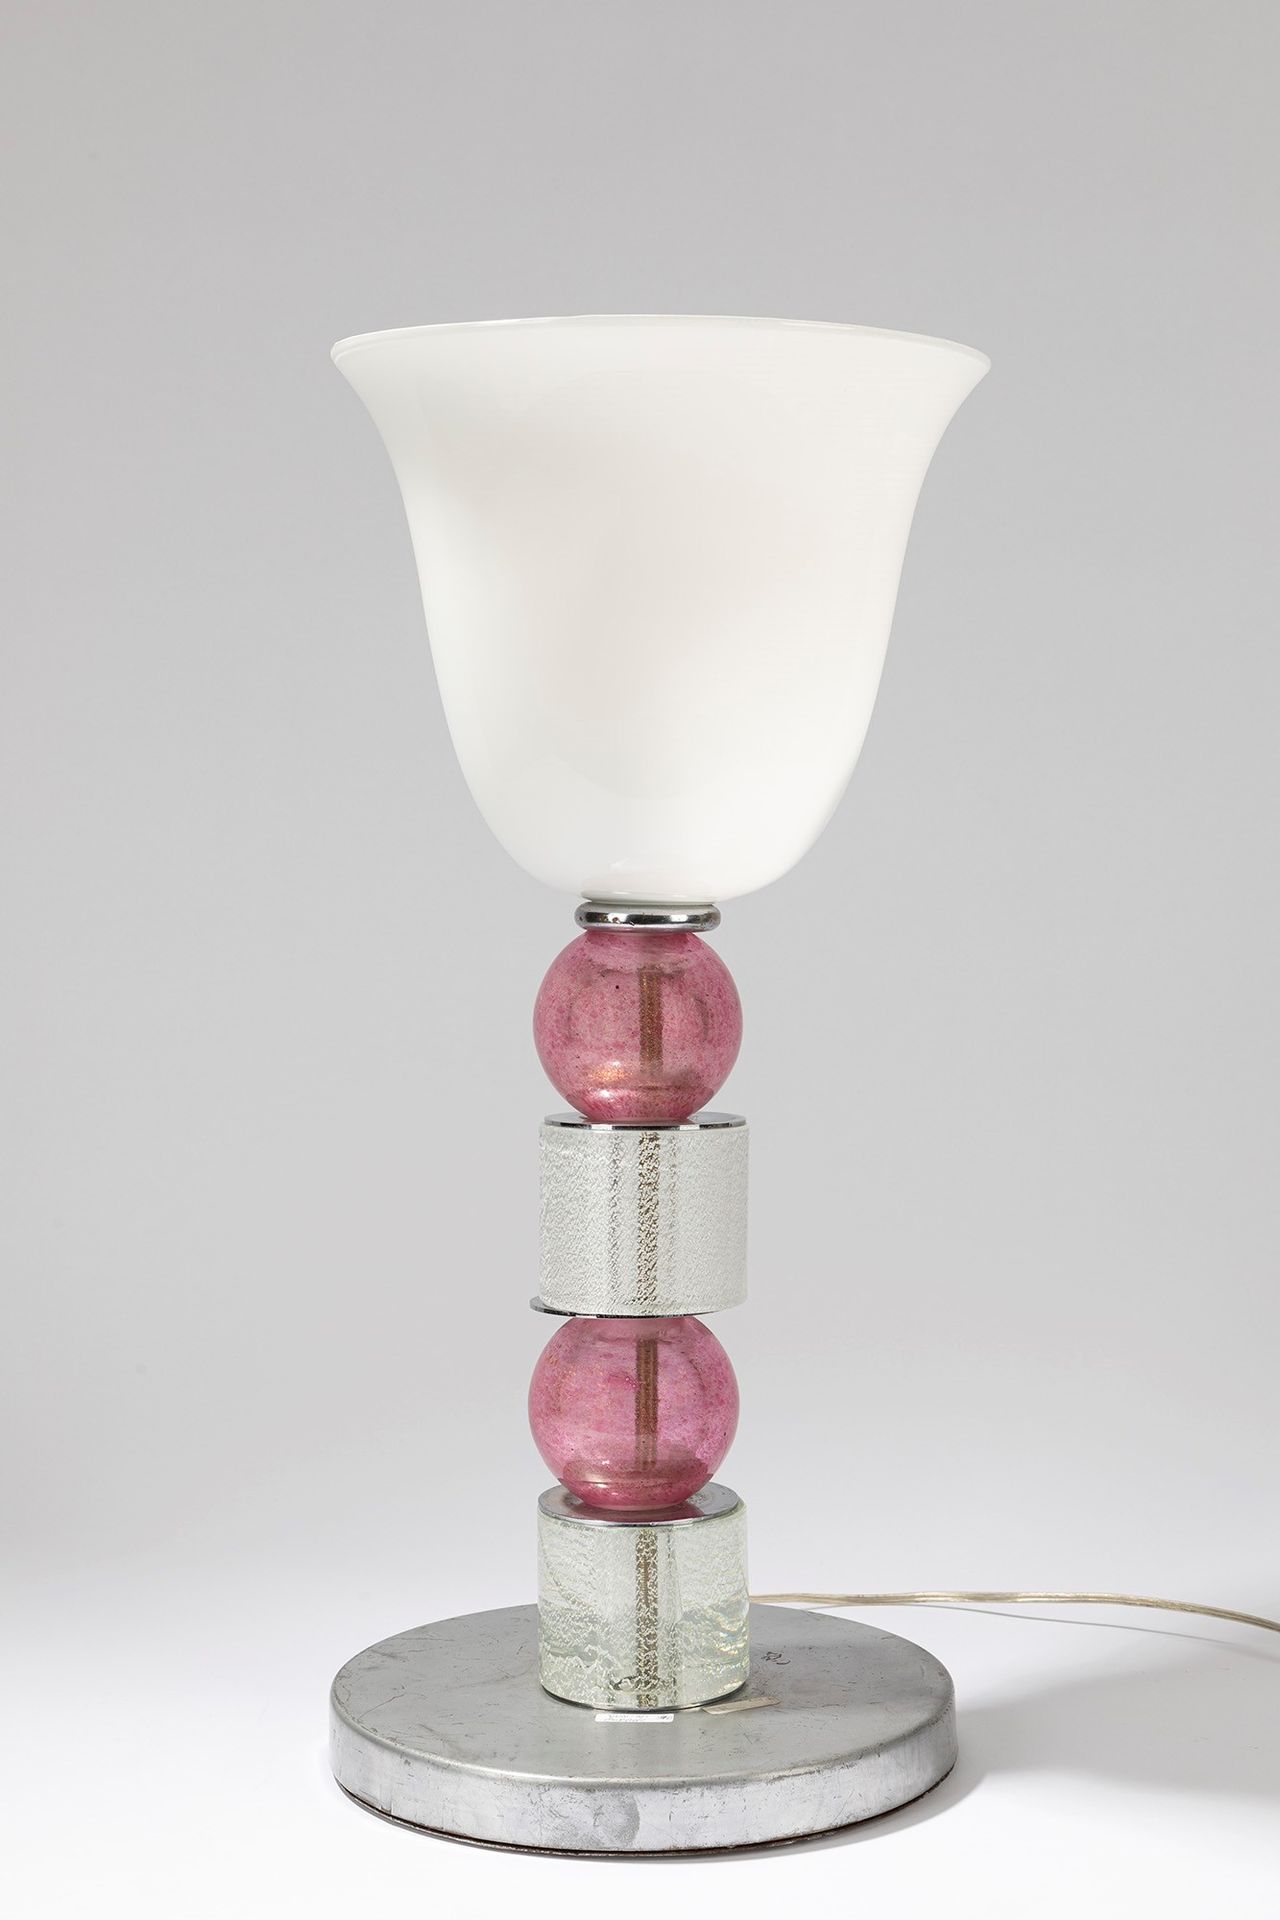 ITALIAN MANUFACTURE Table lamp, 40's period

dm cm 26 x H cm 56.
Blown glass.